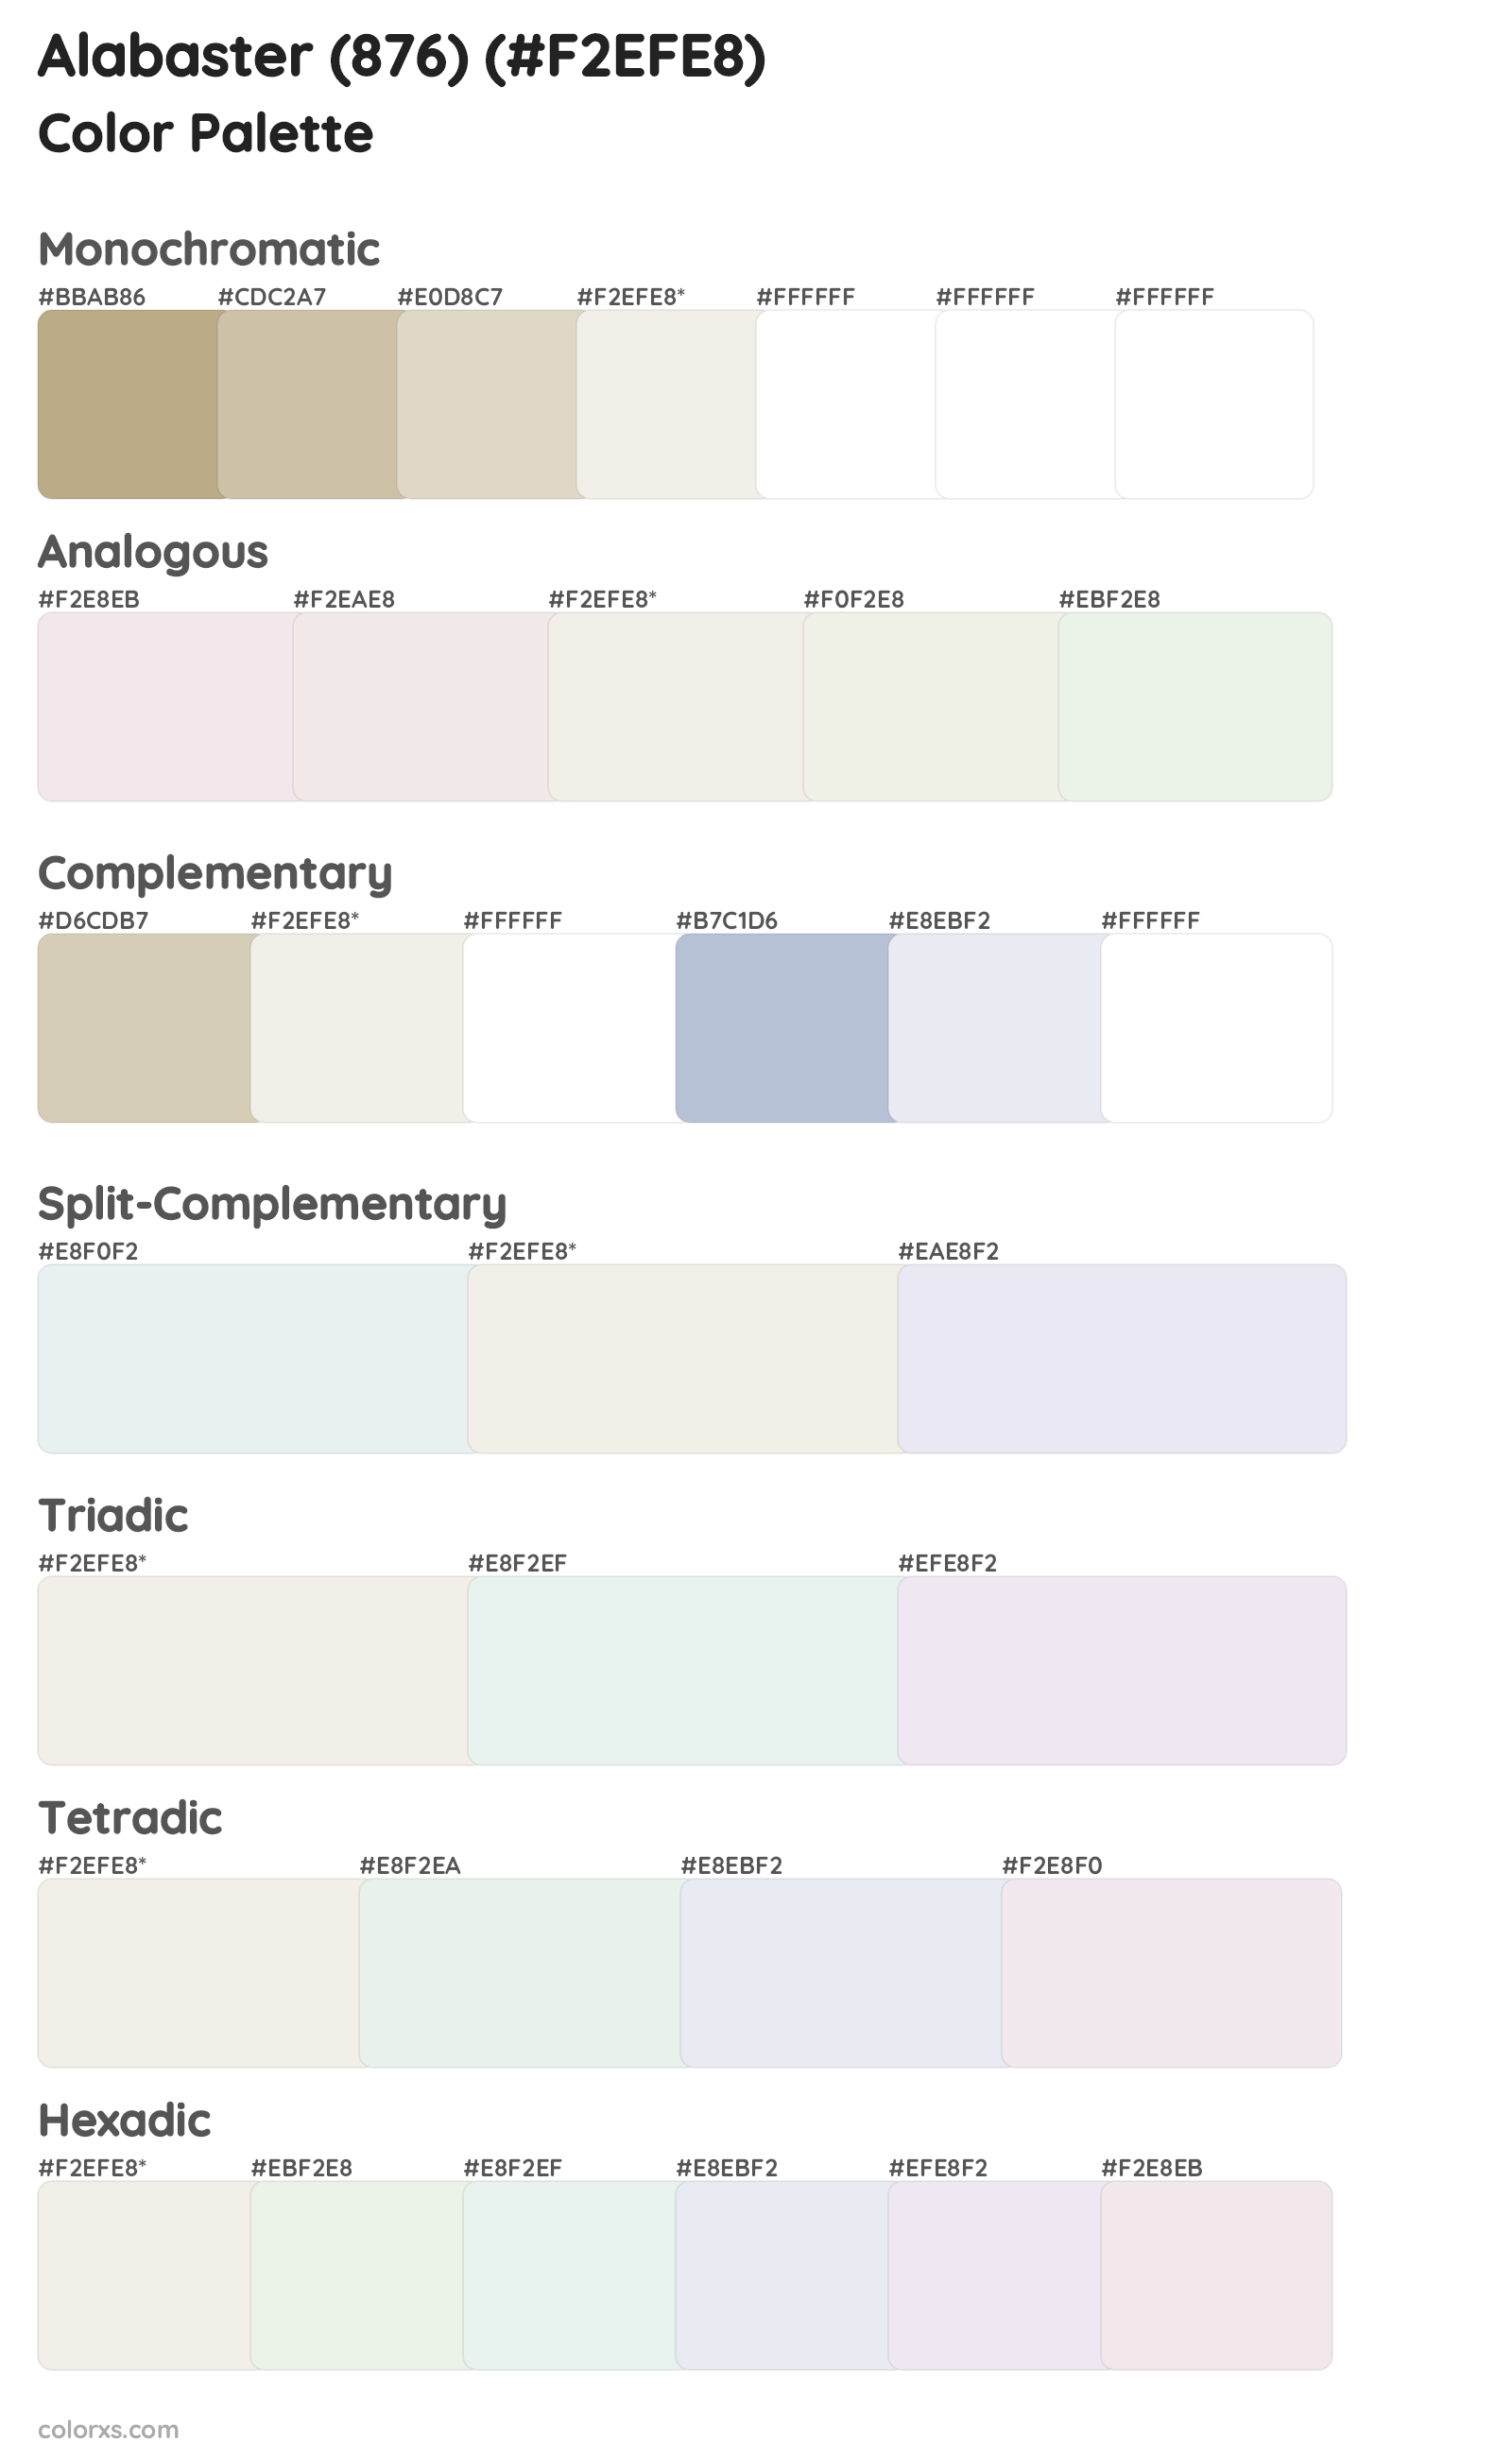 Alabaster (876) Color Scheme Palettes